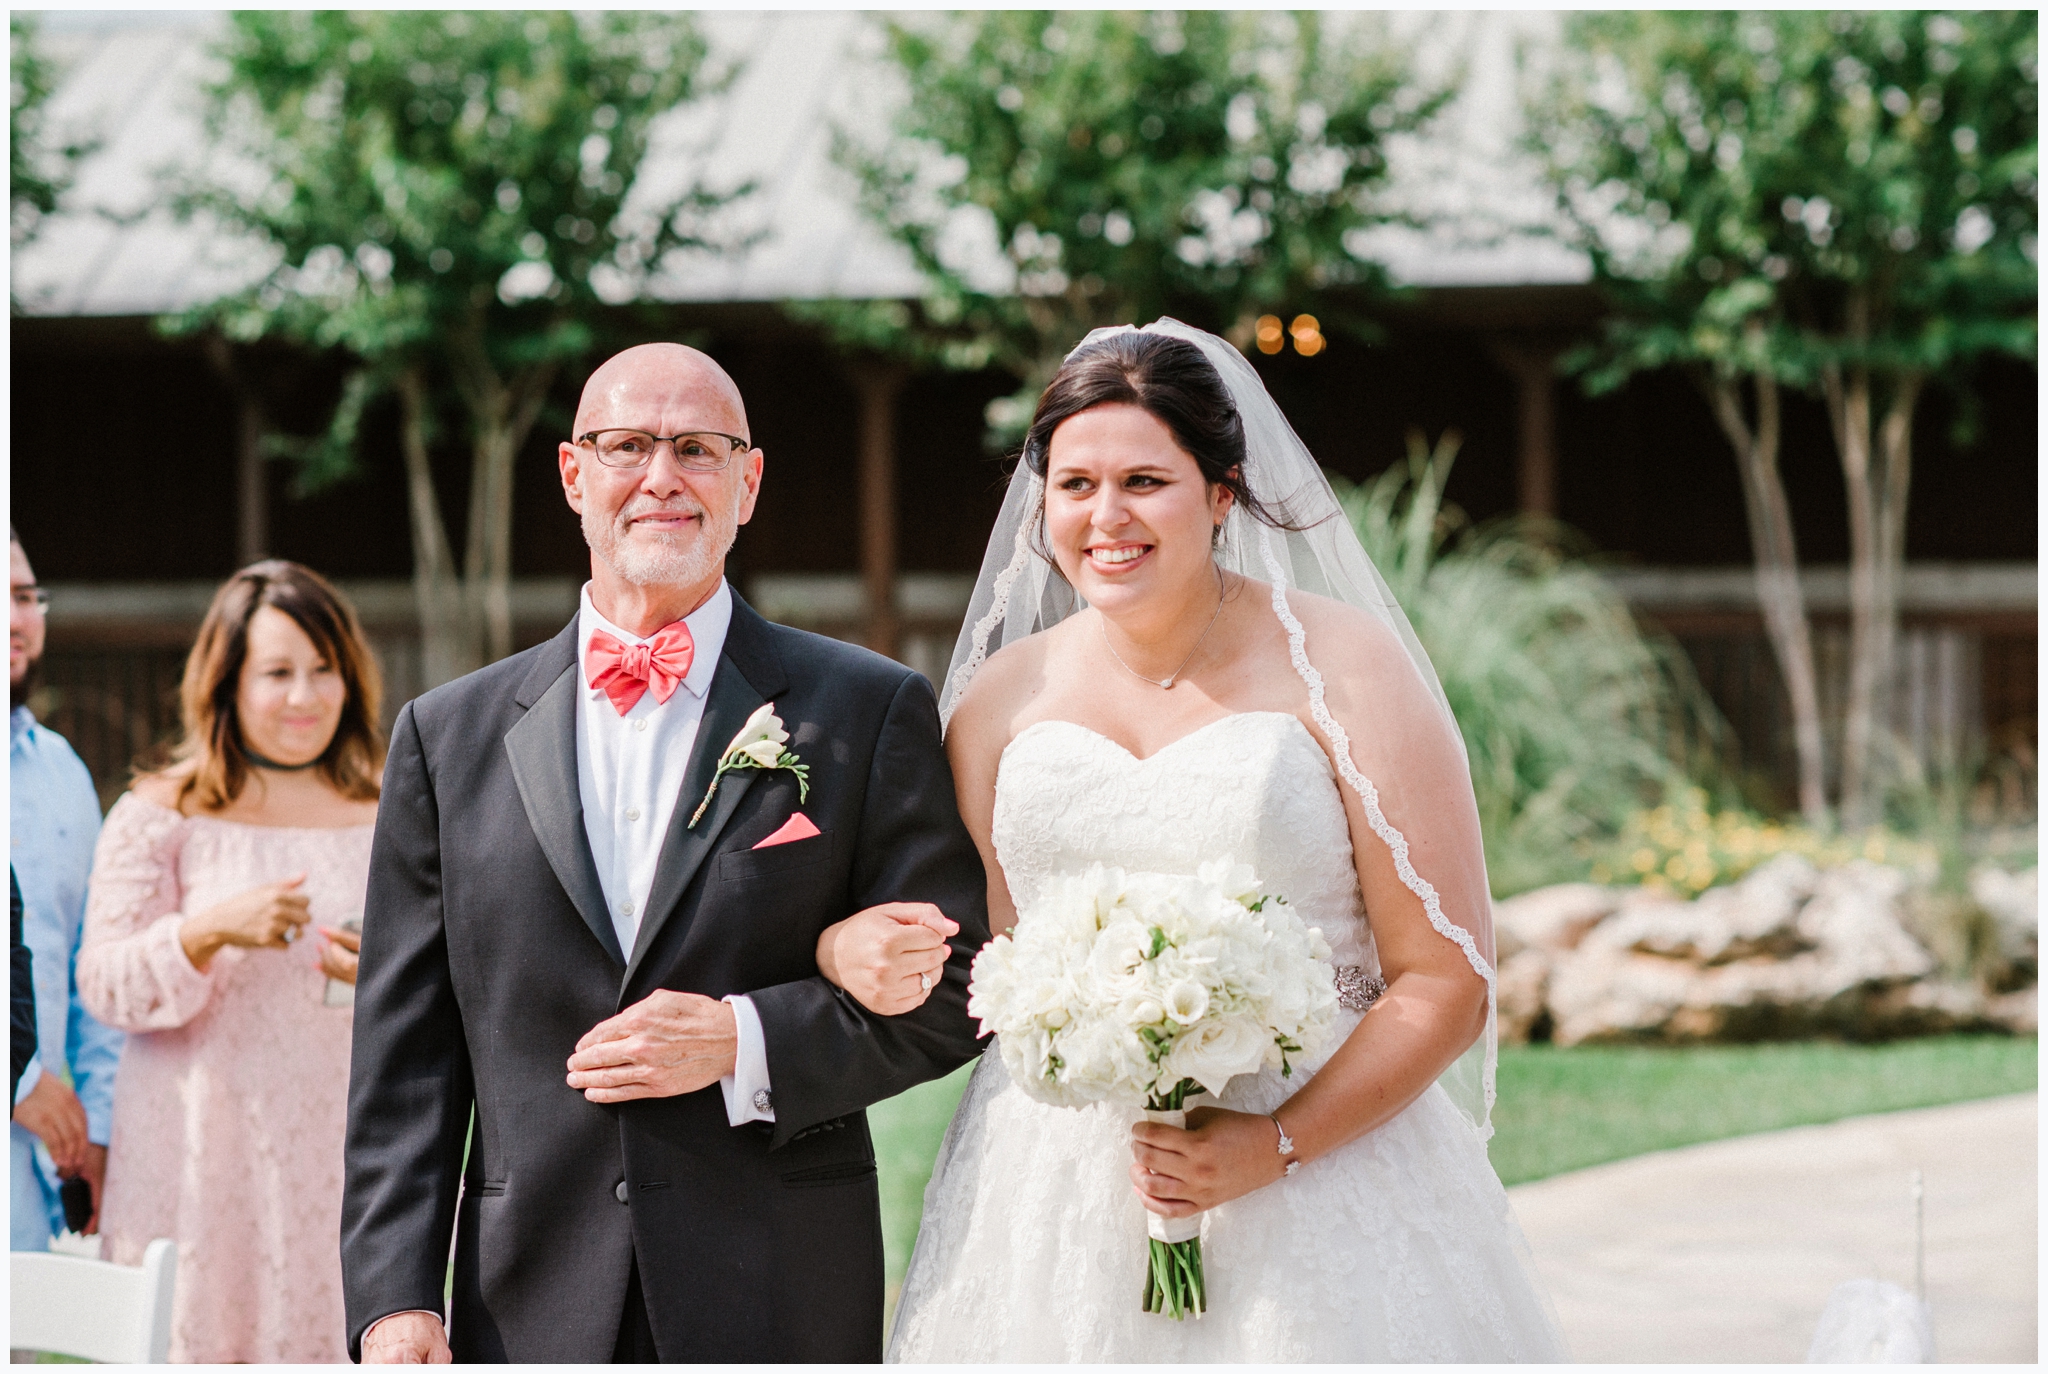 joslyn-holtfort-photography-austin-texas-wedding-the-union-on-eighth-georgetown_0020